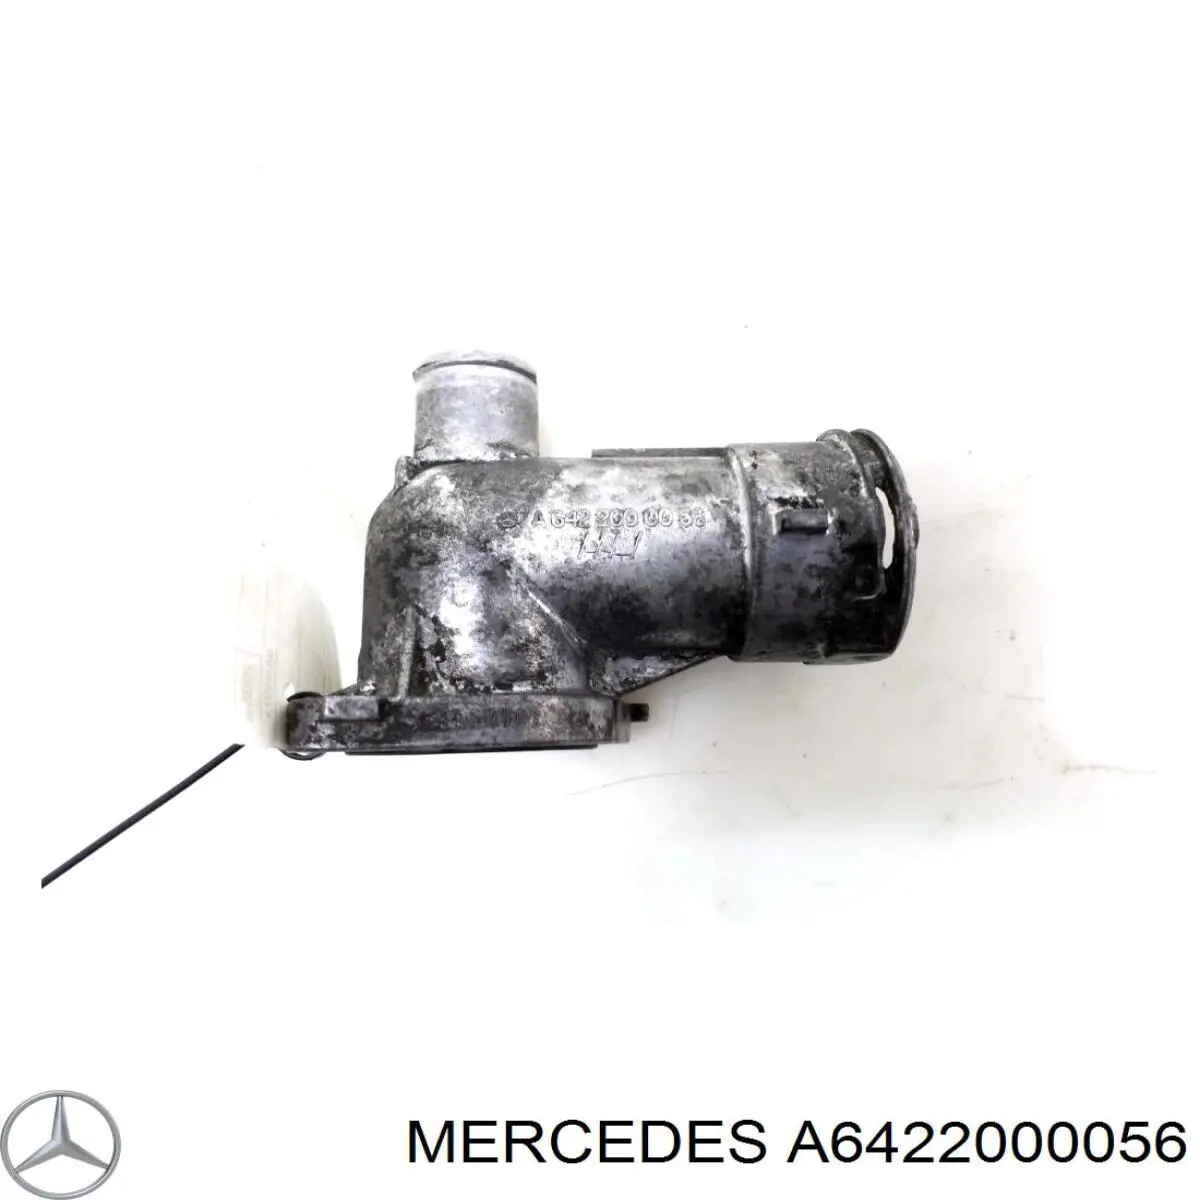 6422000056 Mercedes